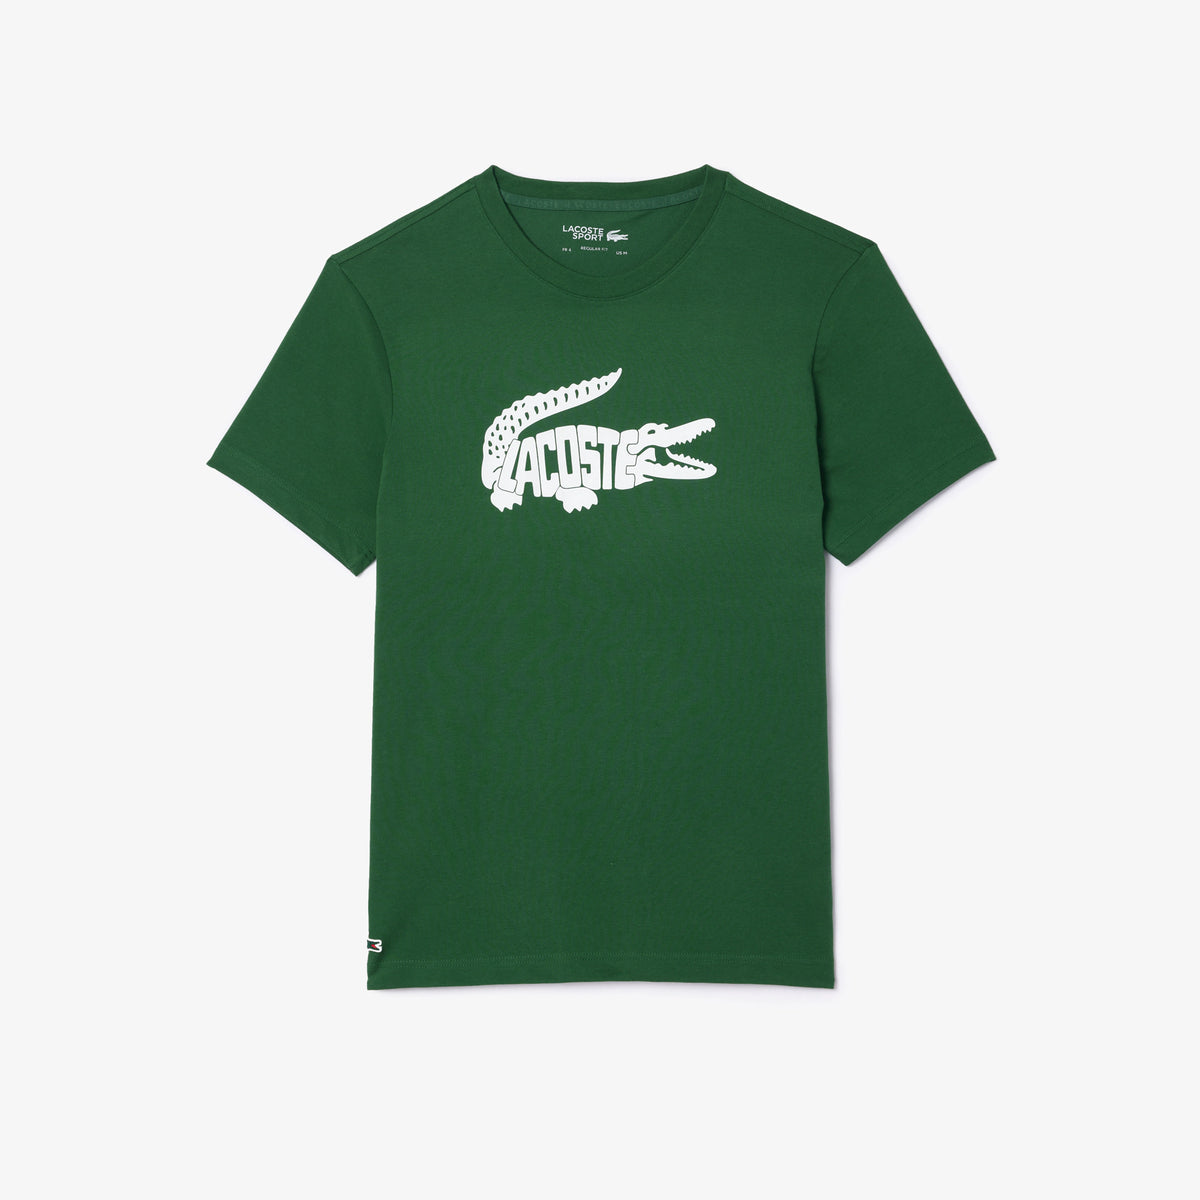 Sport Ultra-Dry Croc Print T-Shirt - Green/White